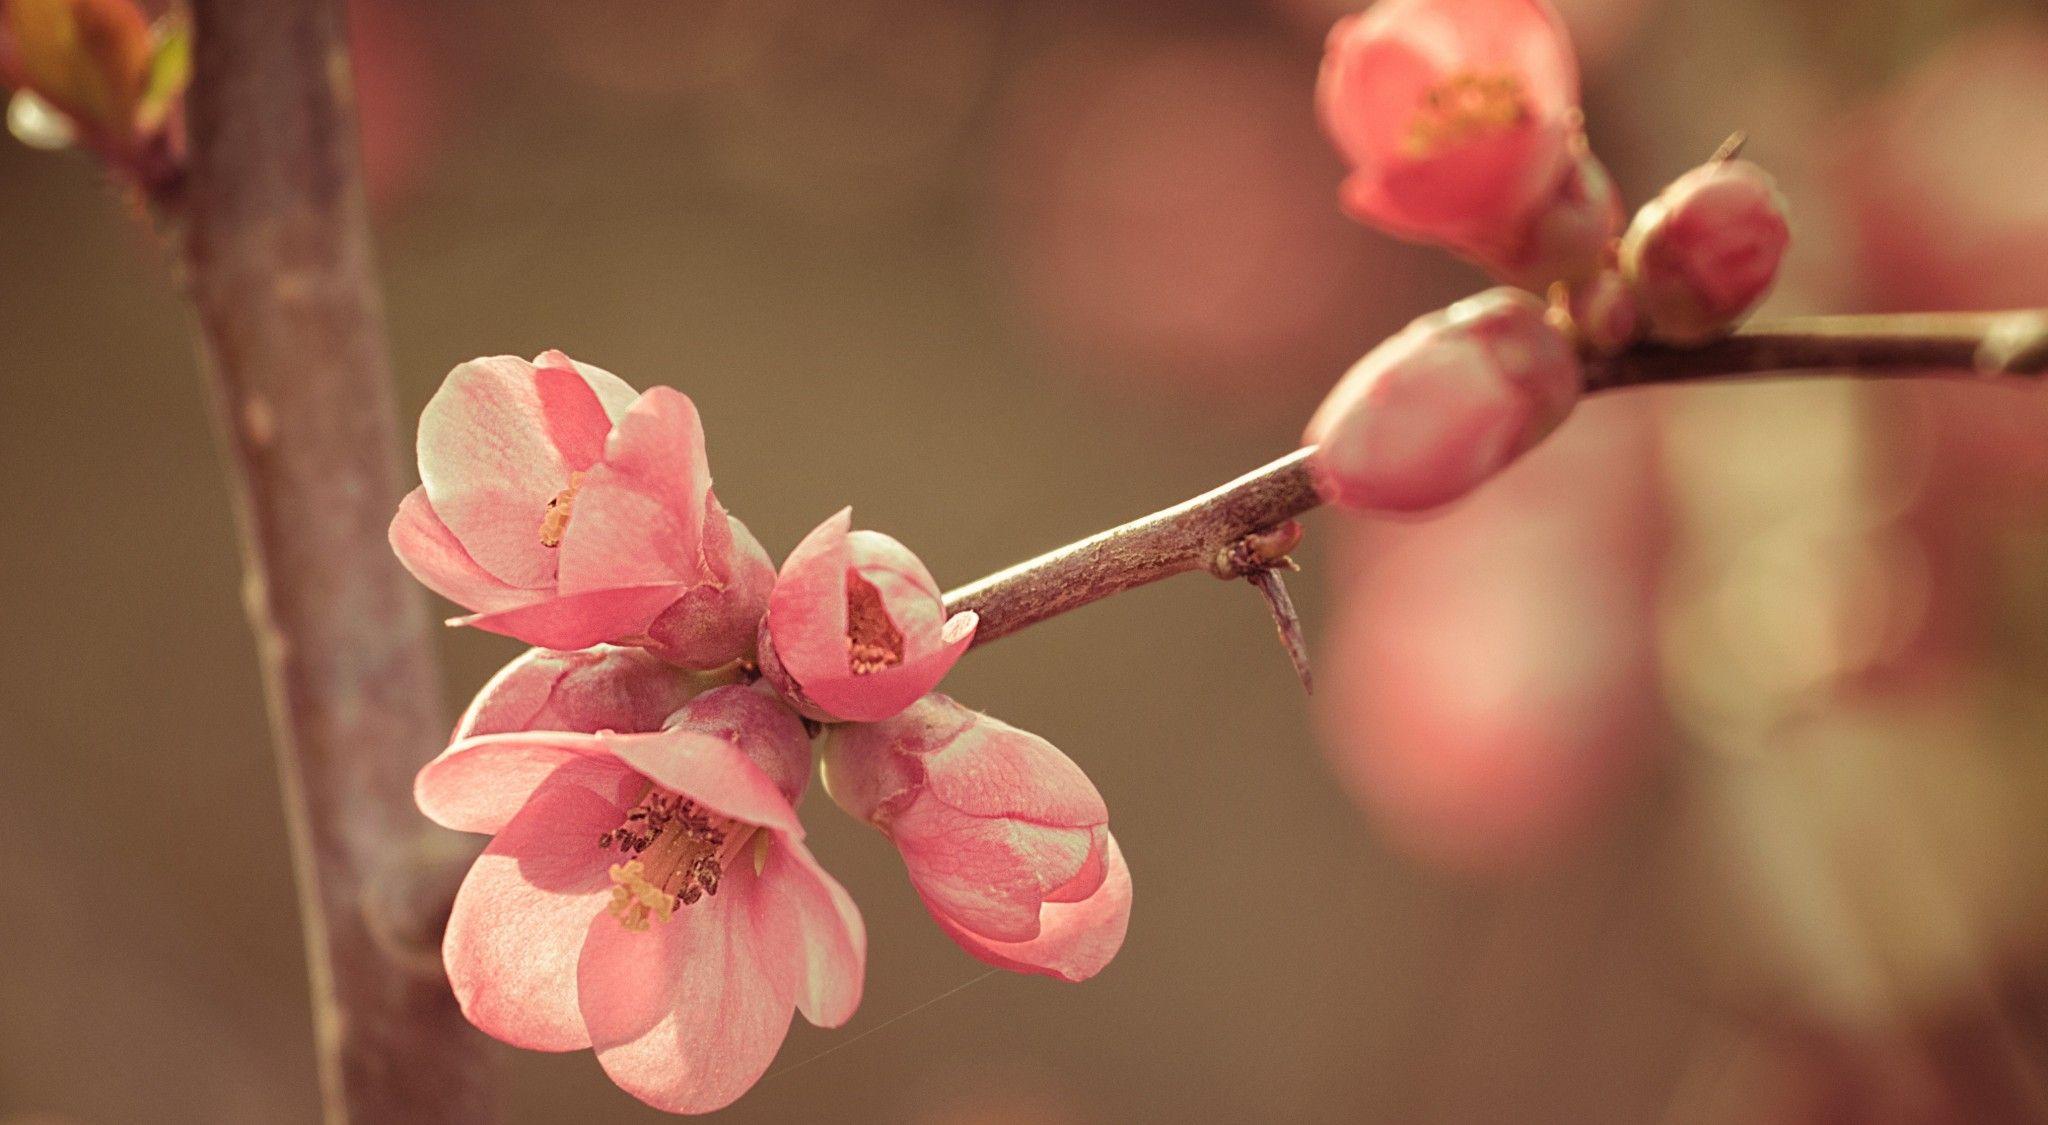 Download 2048x1125 Pink Flower, Blossom, Branch, Blurred